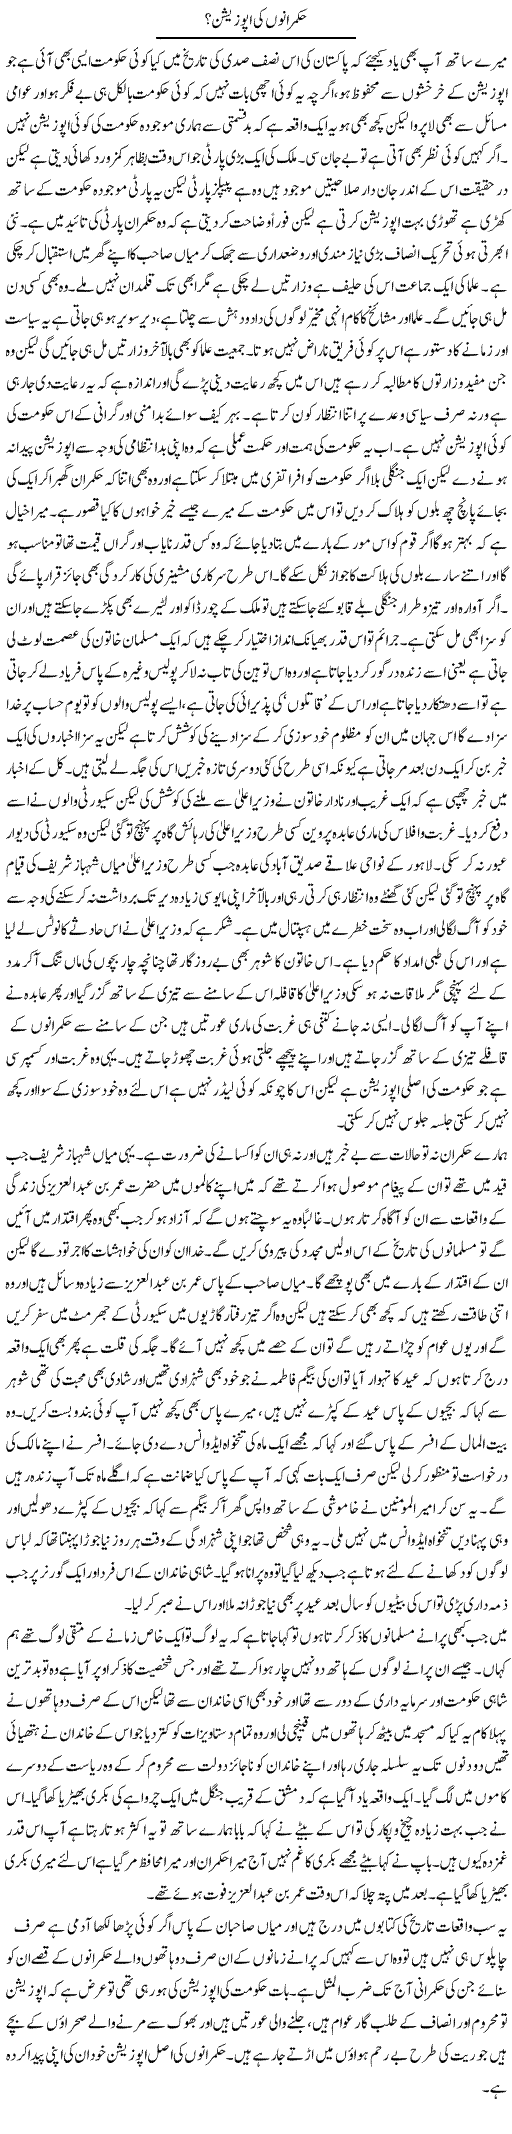 Hukmarano Ki Opposition | Abdul Qadir Hassan | Daily Urdu Columns